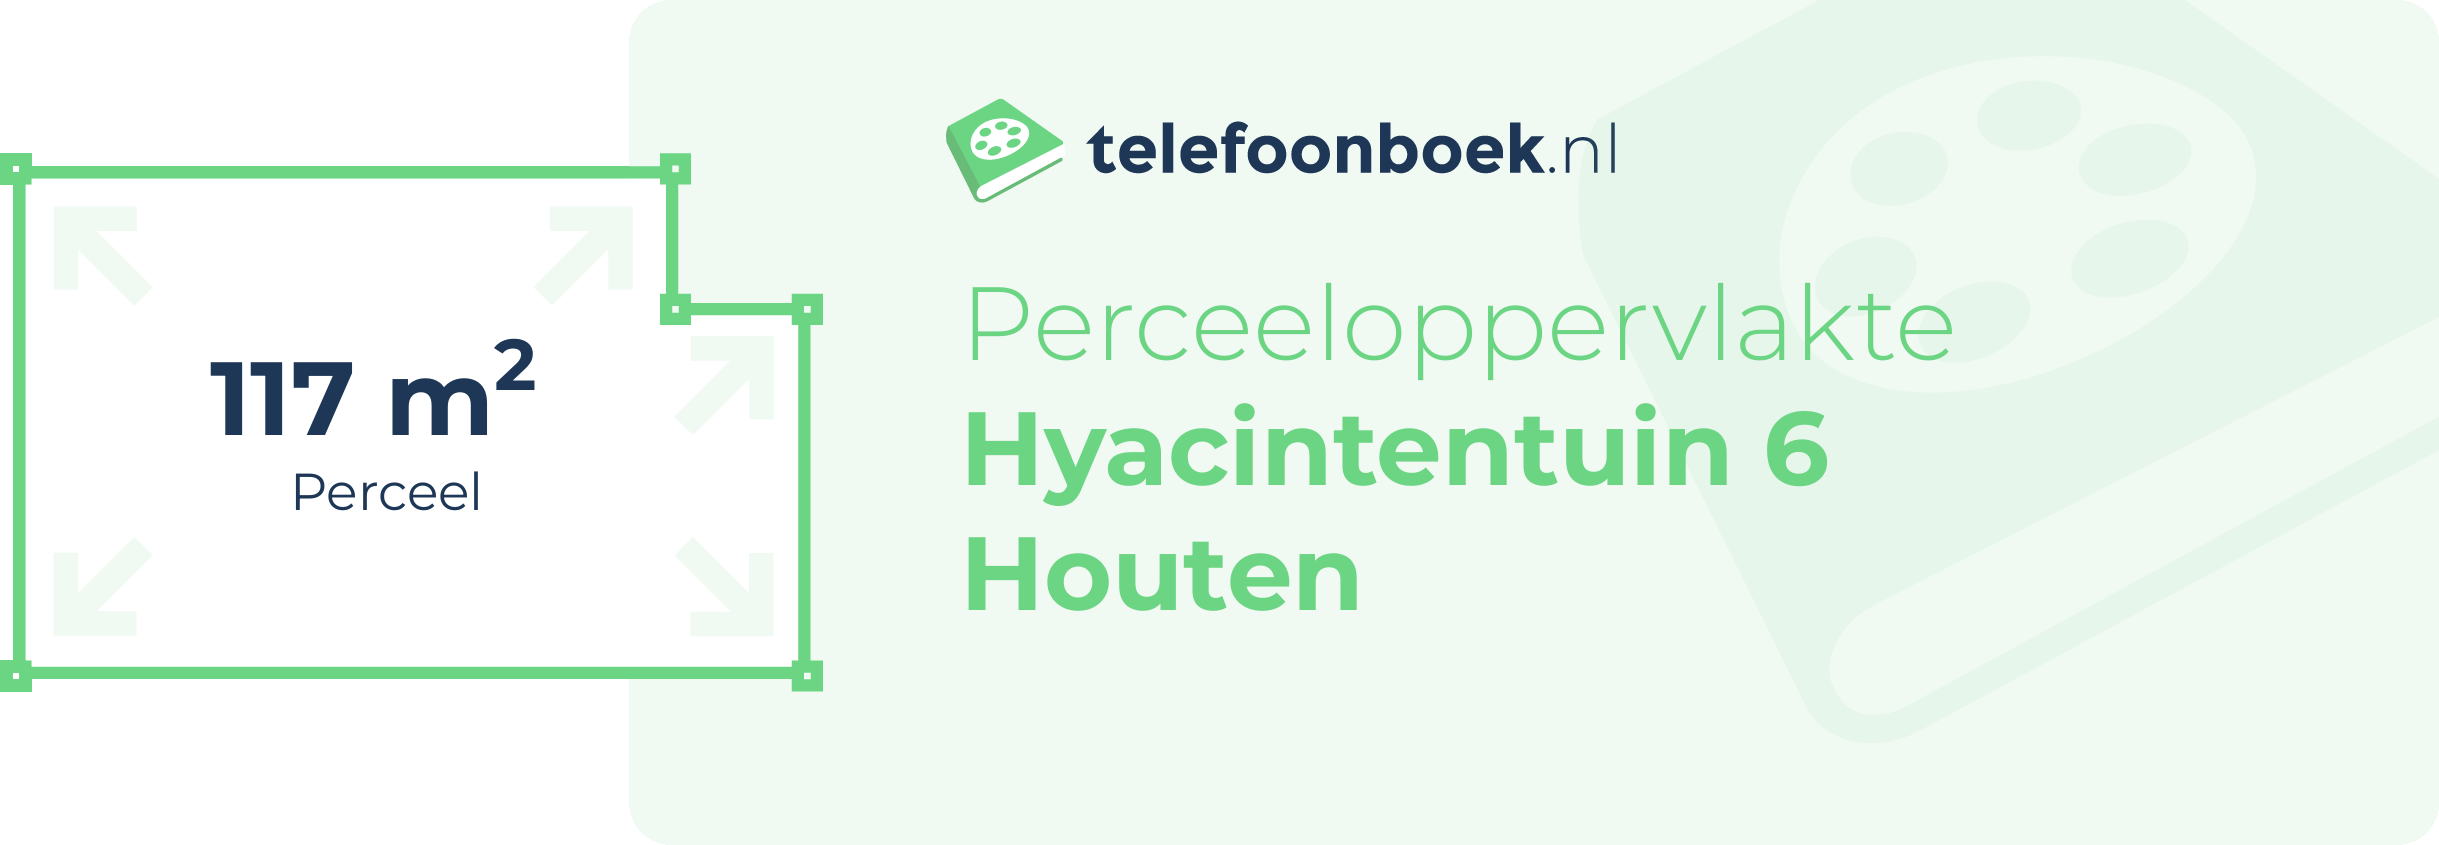 Perceeloppervlakte Hyacintentuin 6 Houten